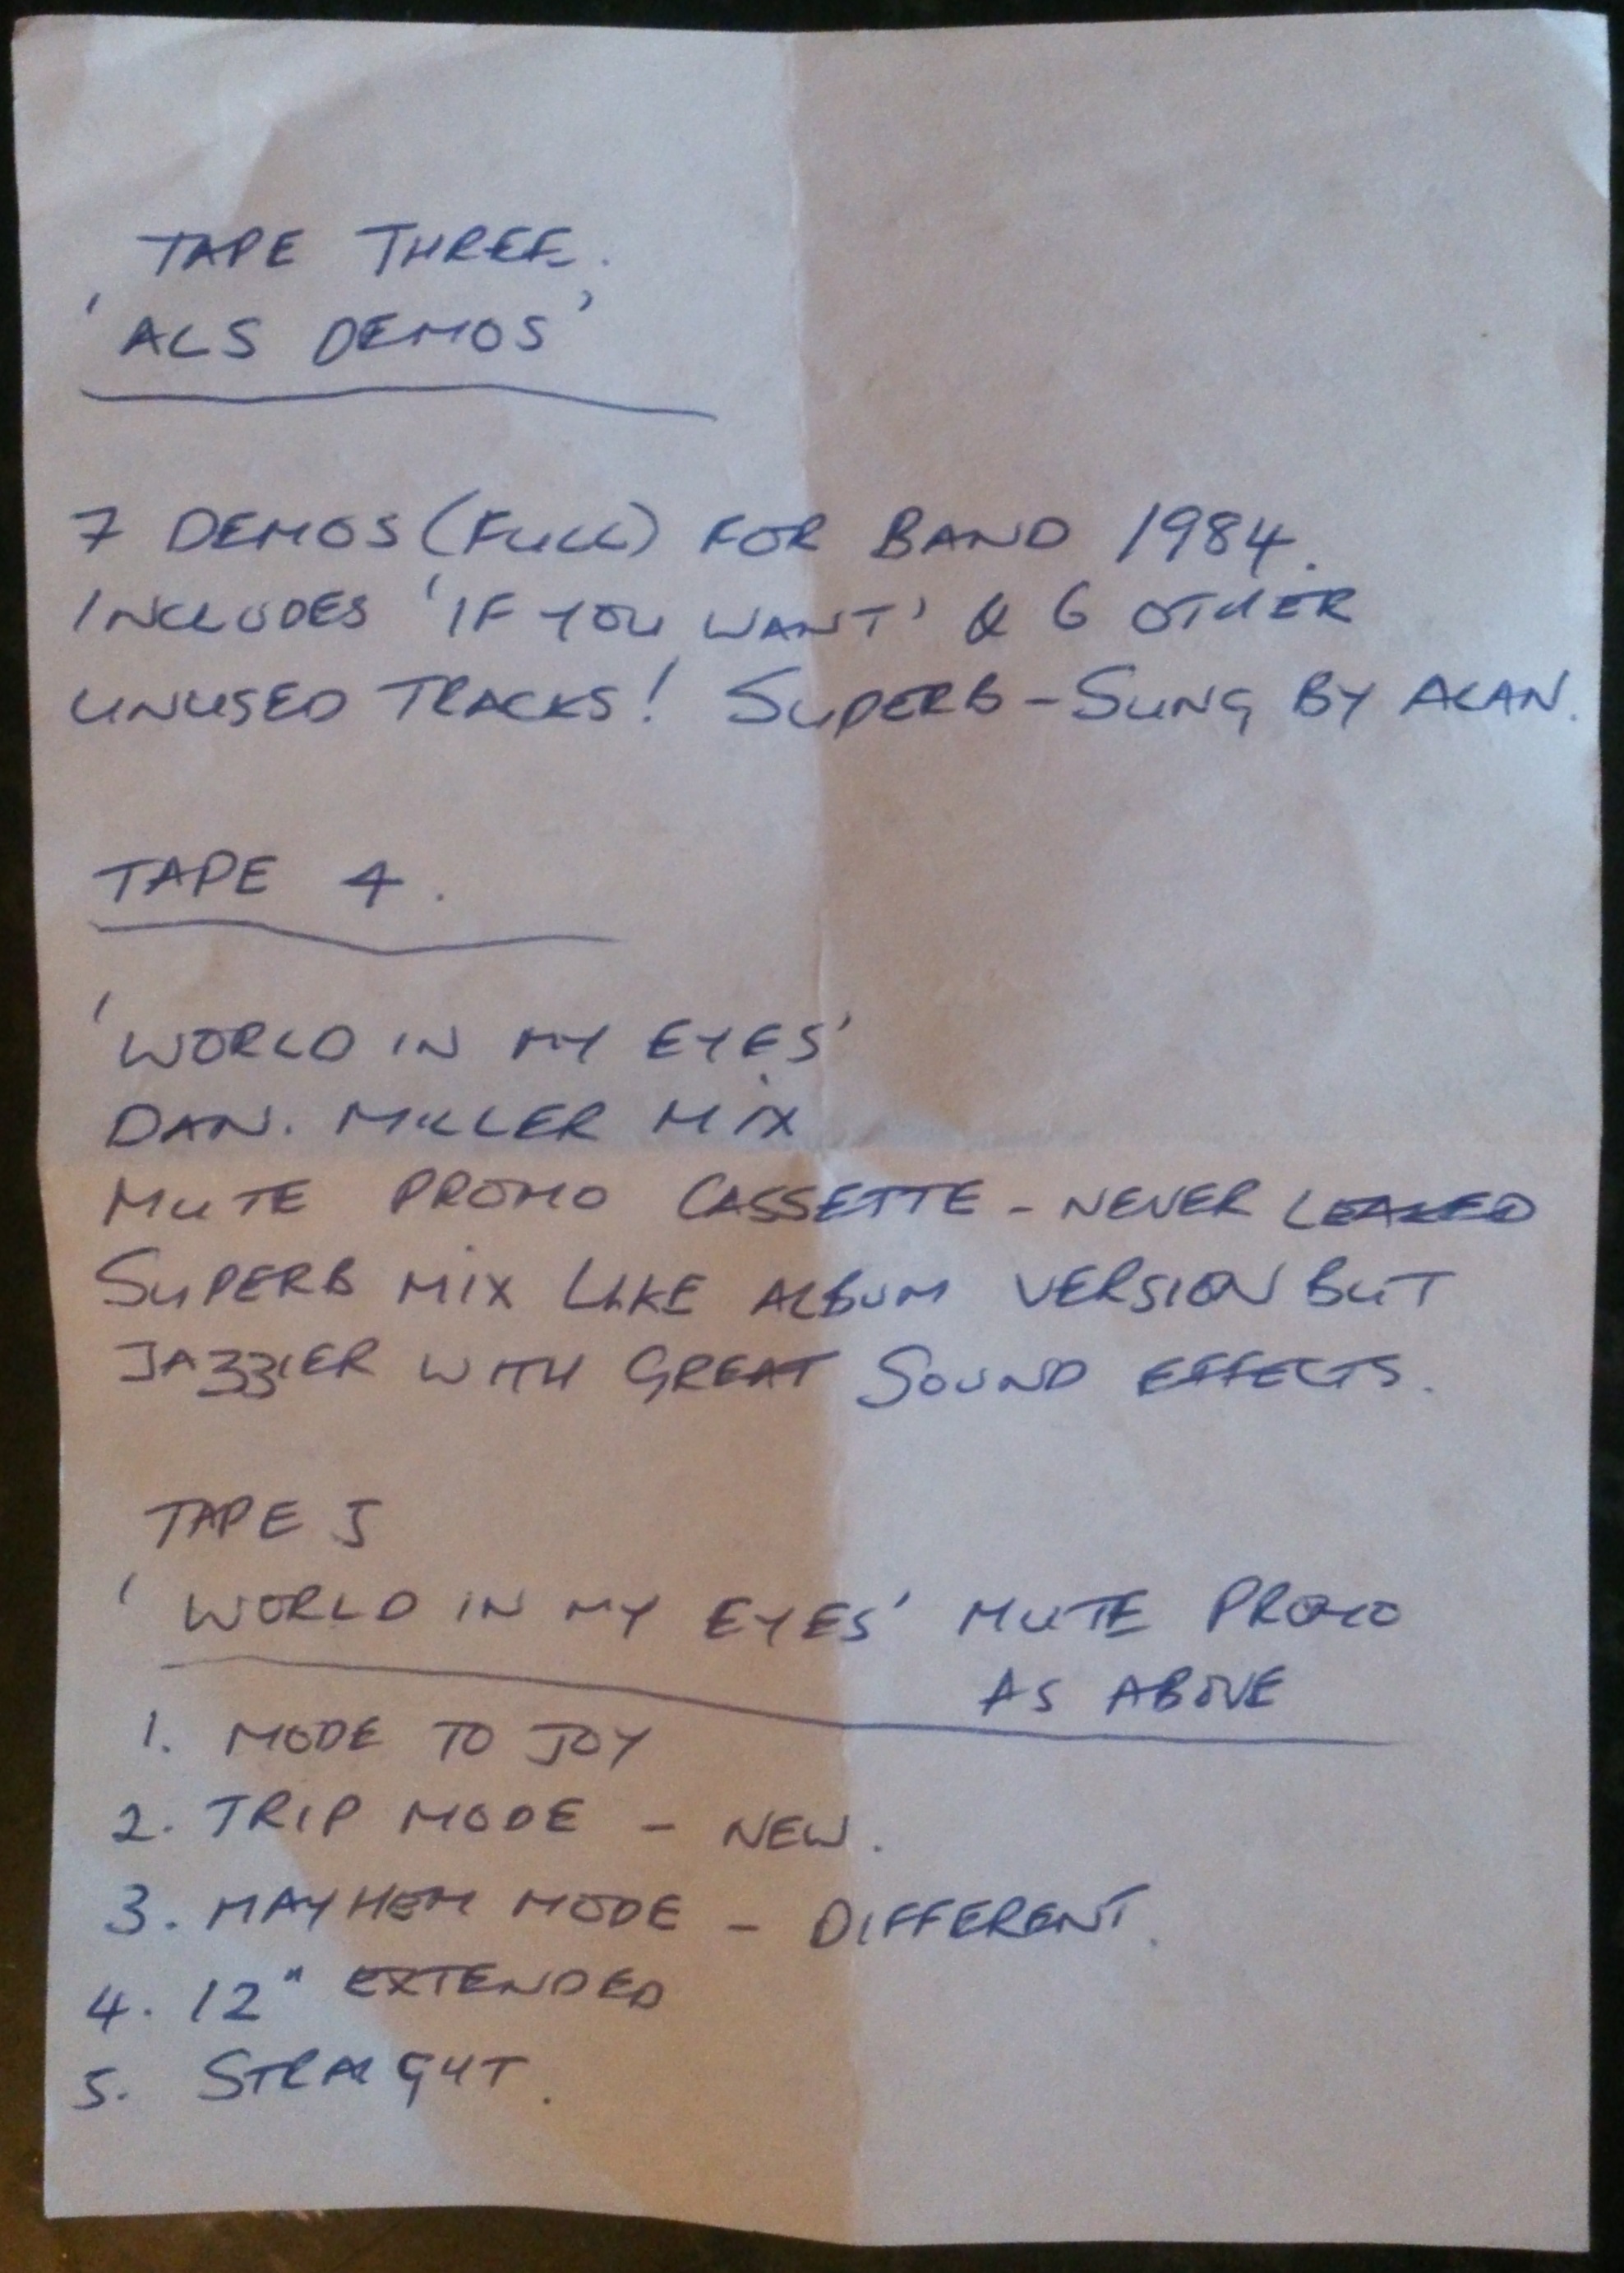 Handwritten information sheet mentioning 7 Alan demo tracks.